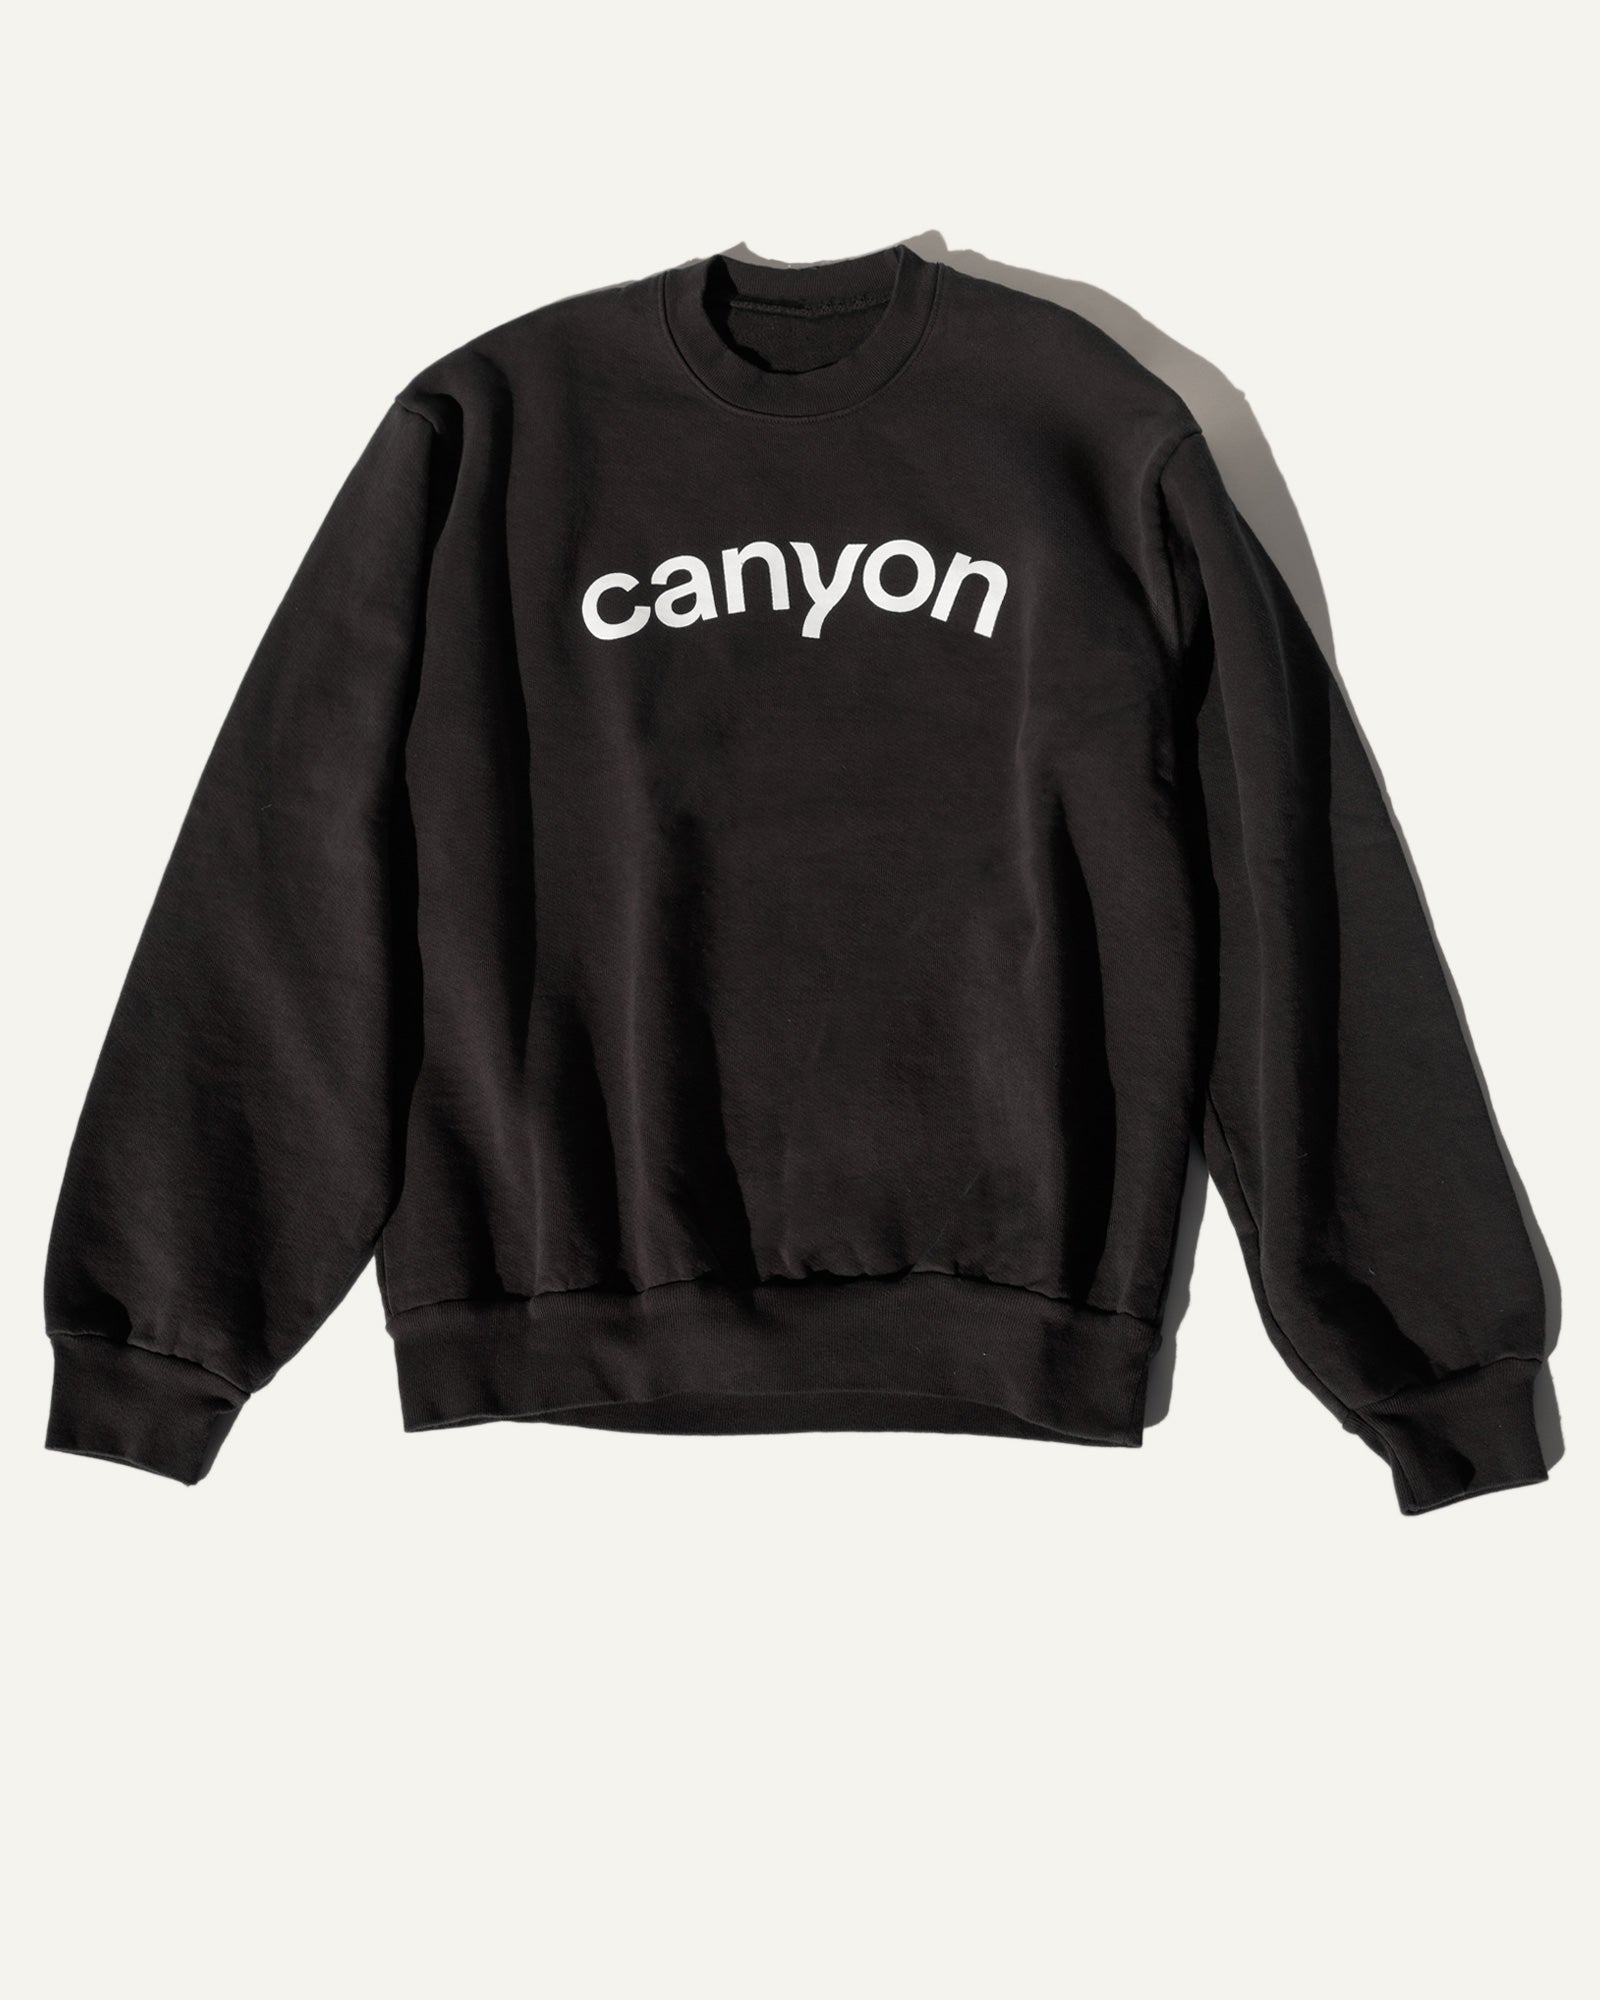 Canyon Sweatshirt in Black